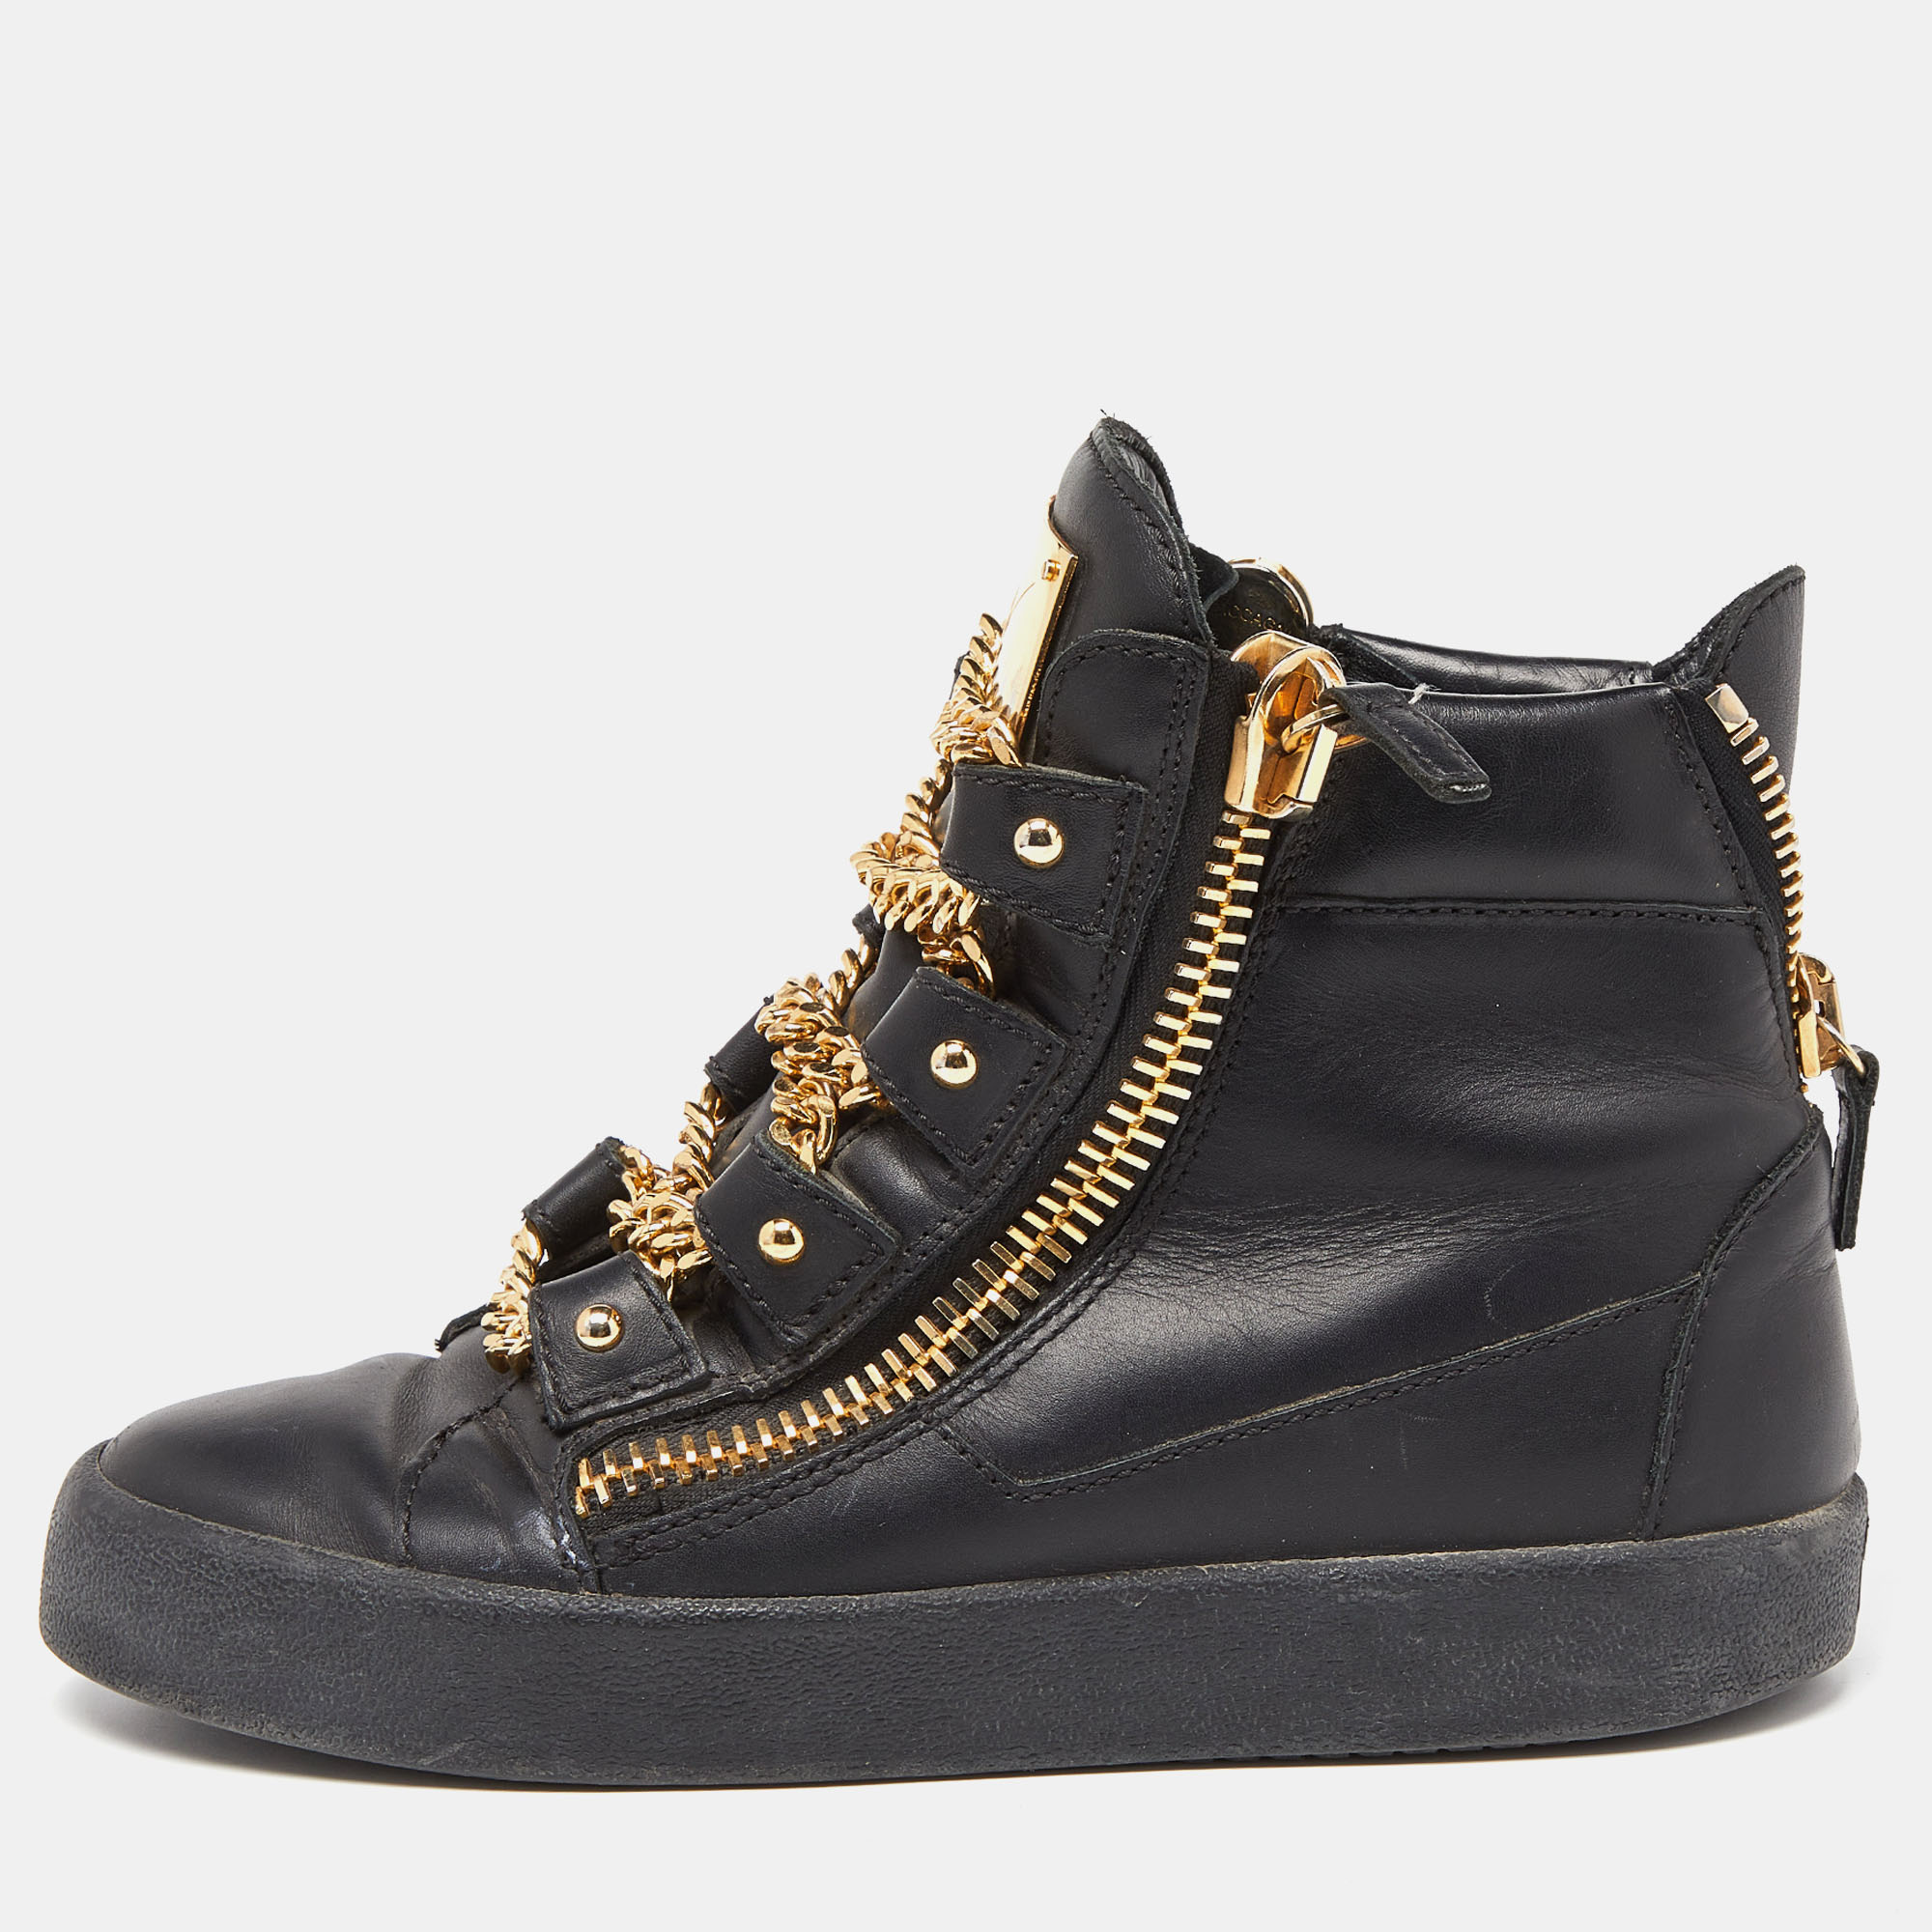 Giuseppe zanotti black leather london birel chain embellished high top sneakers size 38